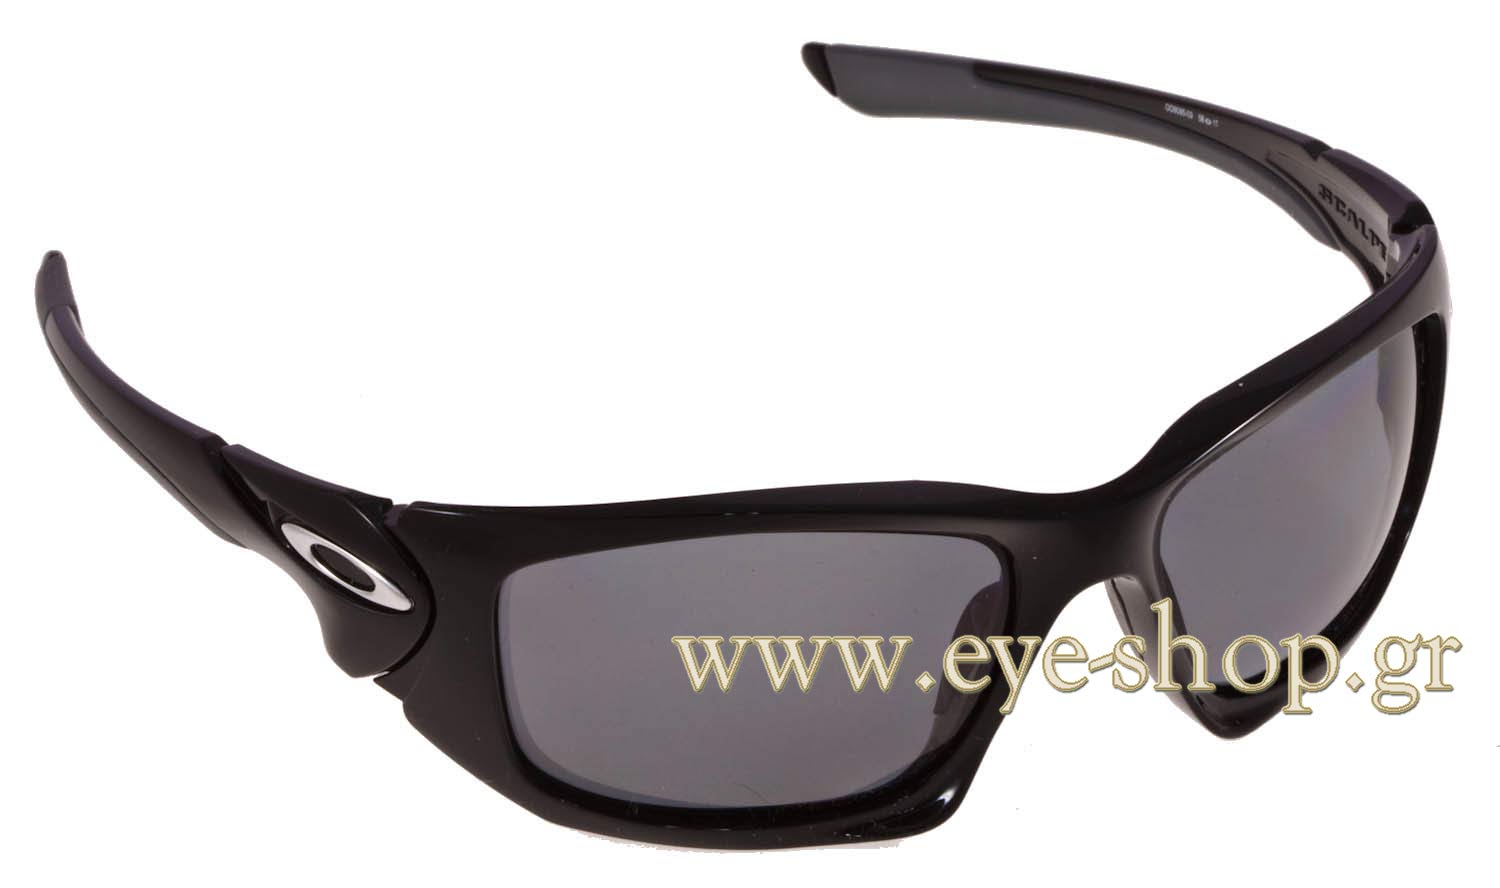  wearing Oakley  sunglasses at EyeShop